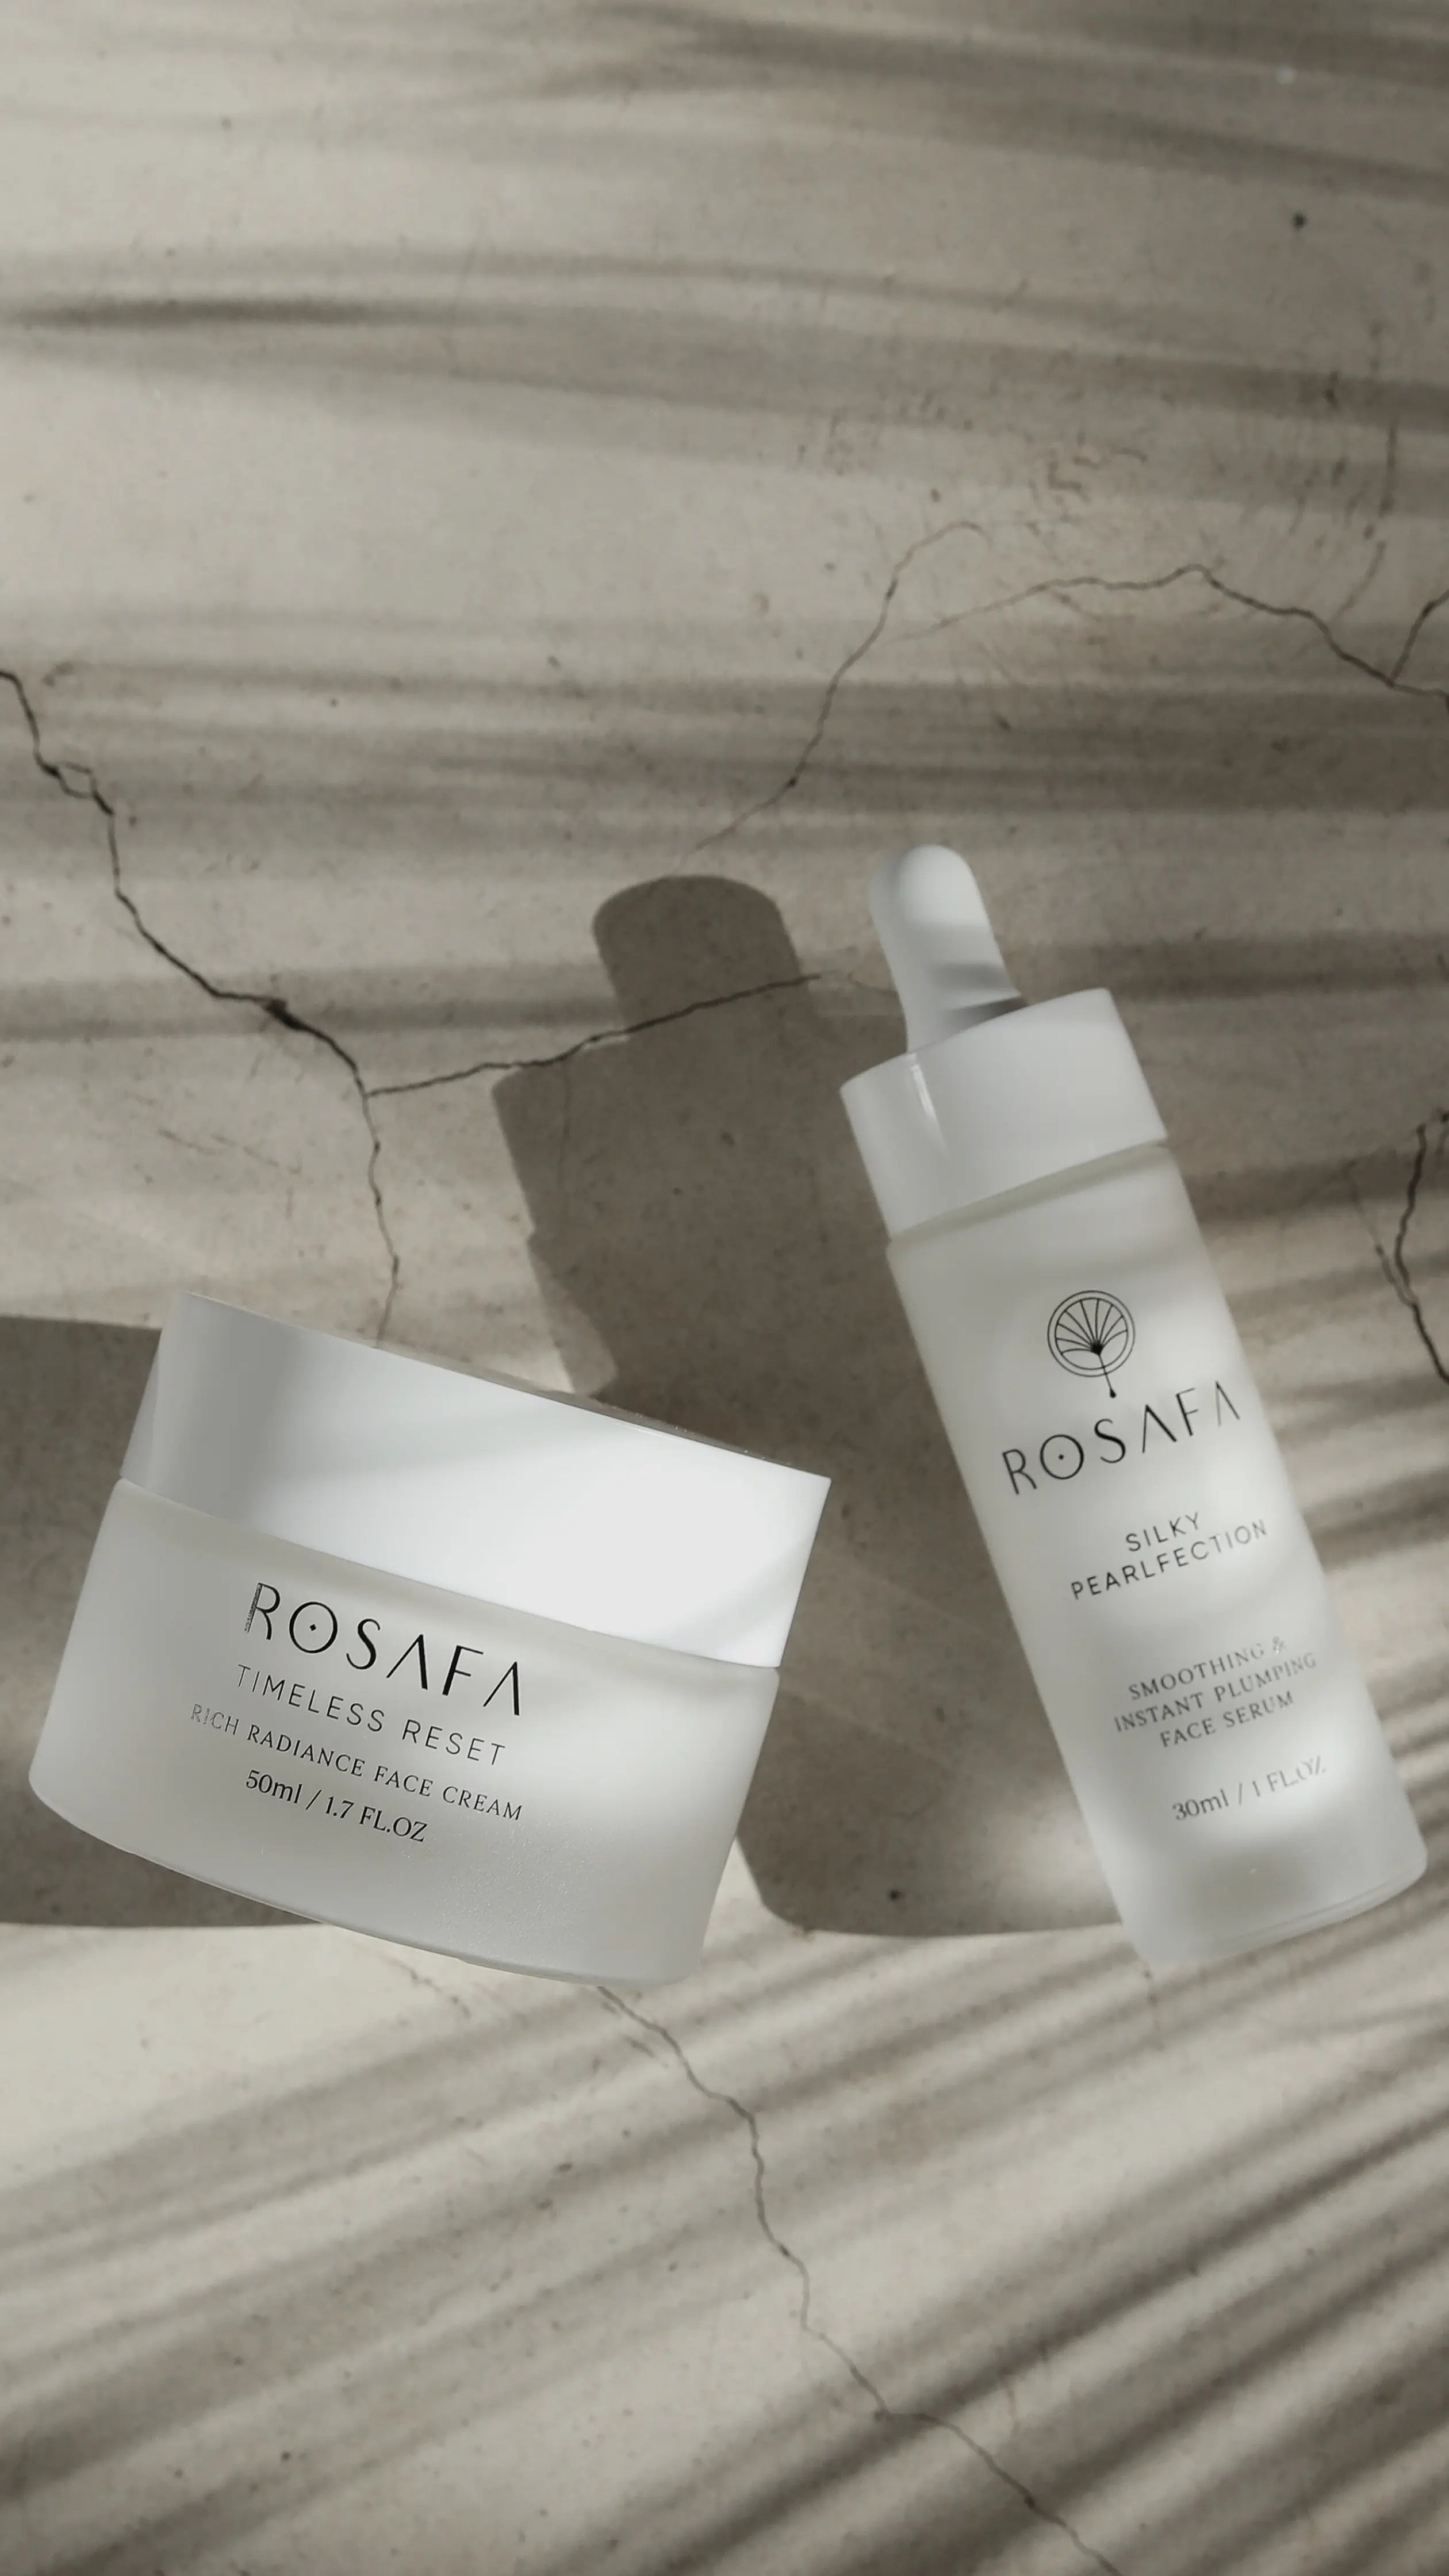 rosafa skincare products on palm tree shadow background